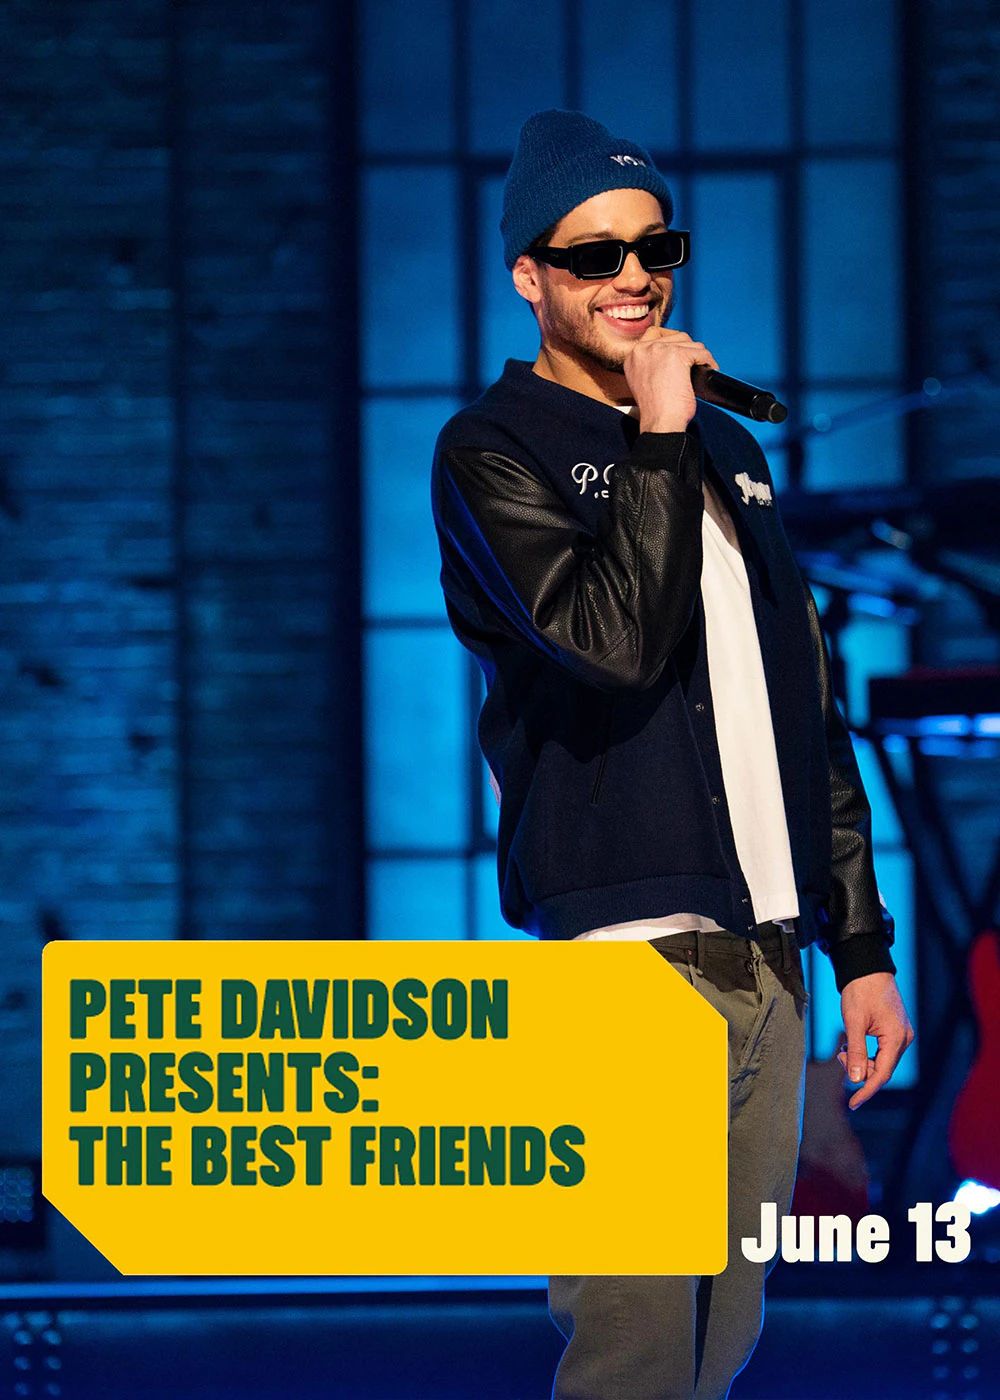 Is Pete Davidson Presents The Best Friends (2022) on Netflix